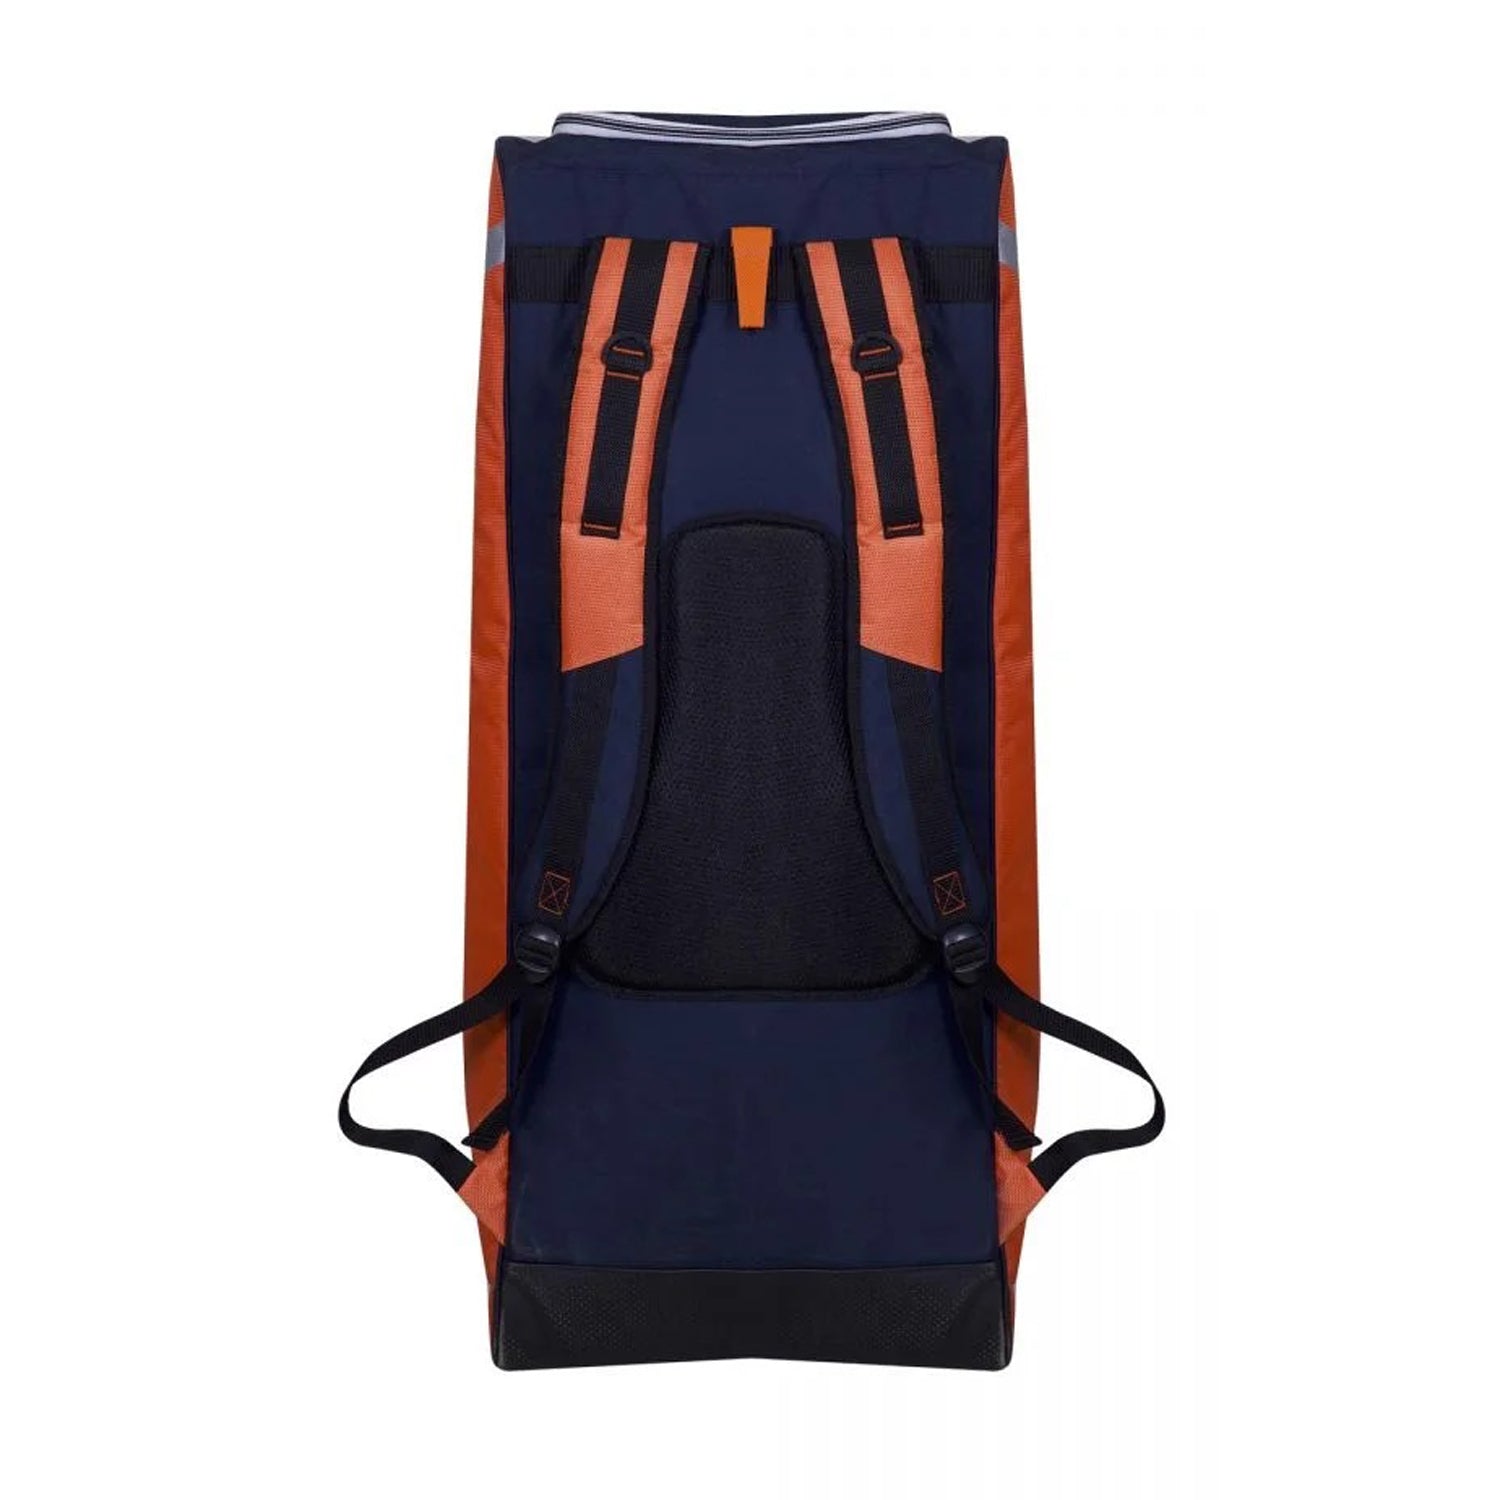 SS Ton Slasher Duffle Cricket Kit Bag - Best Price online Prokicksports.com